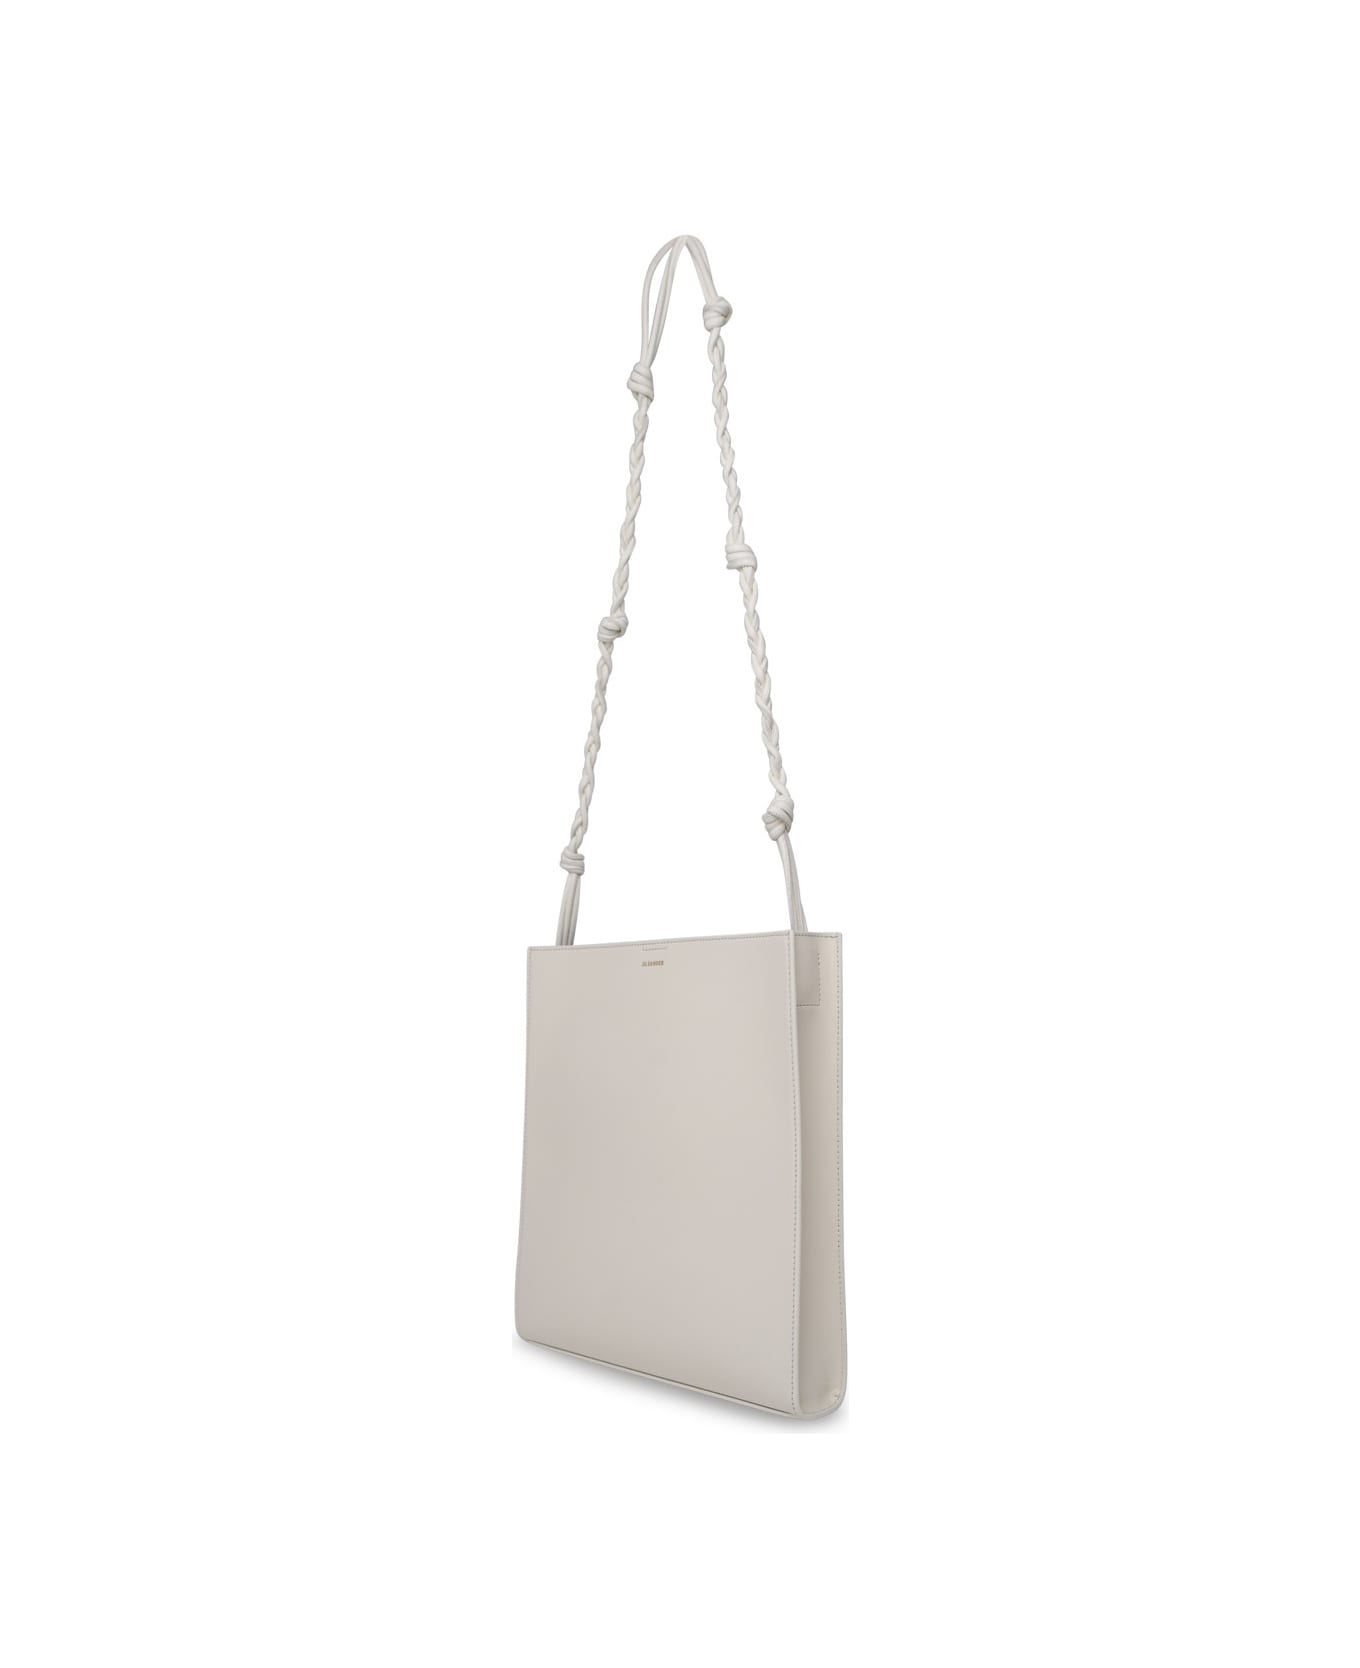 Jil Sander Tangle Bag In White Leather - White